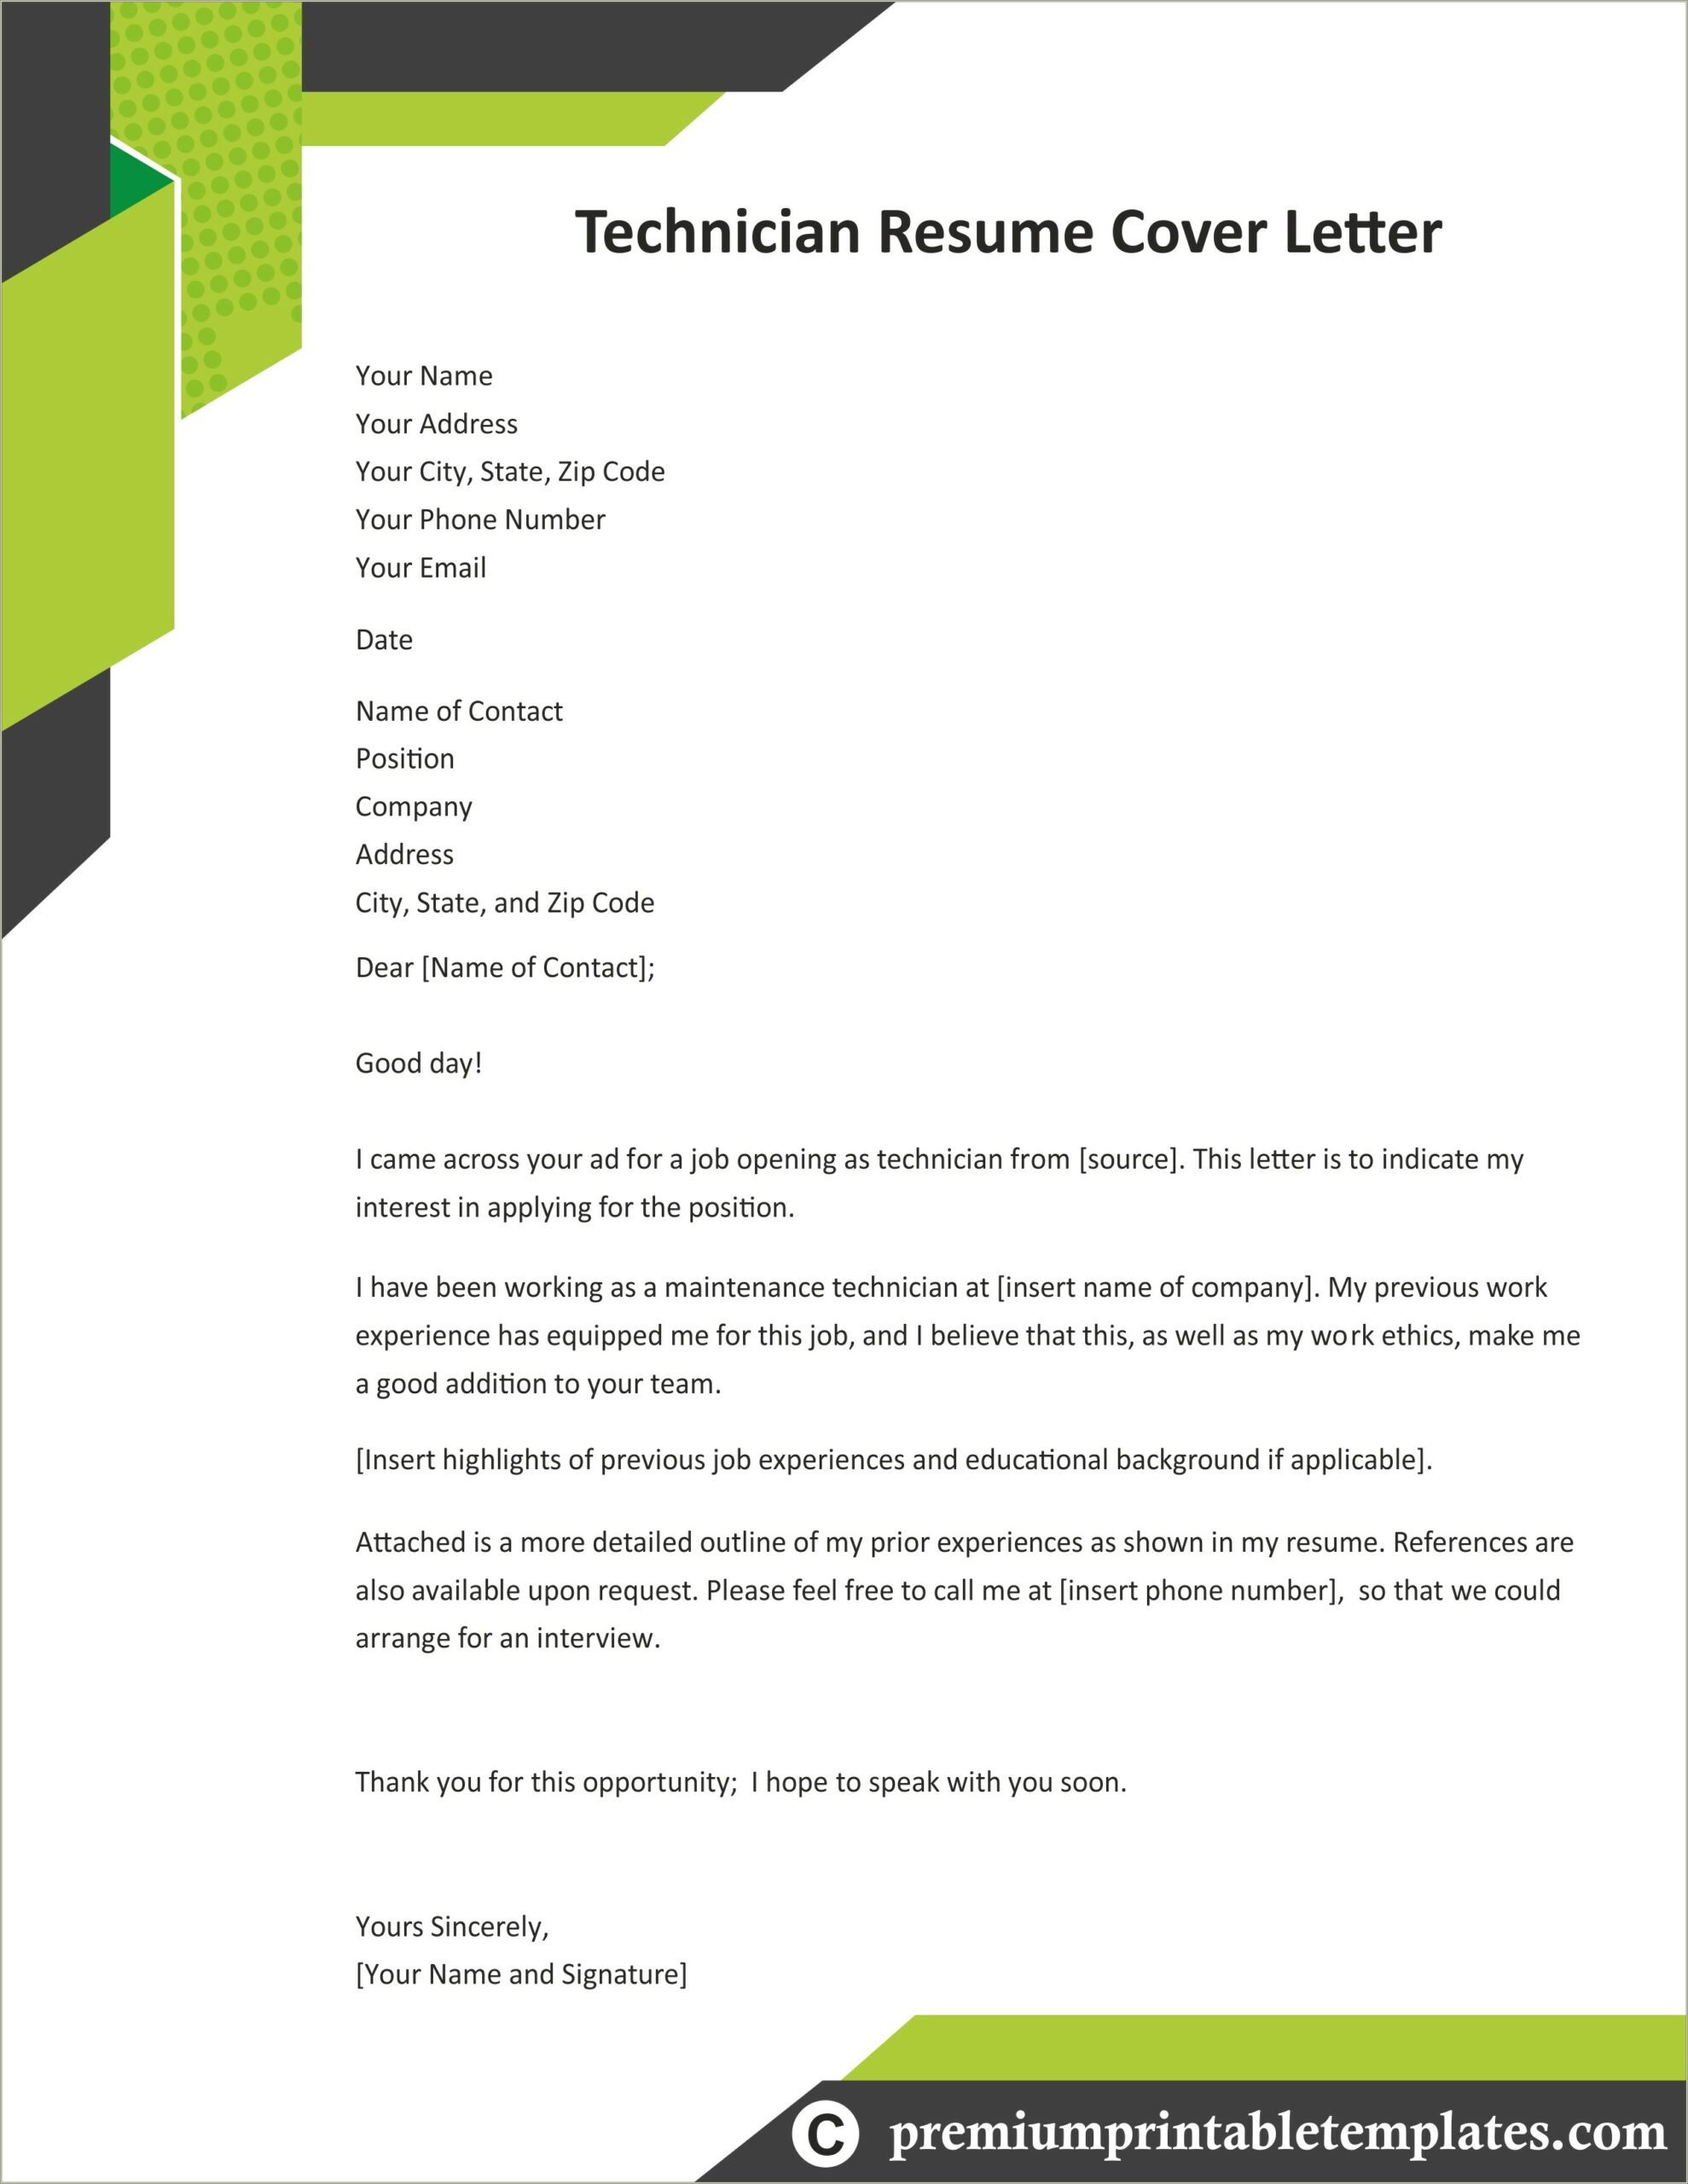 Example Cover Letter For Resume For Maintenance Technician